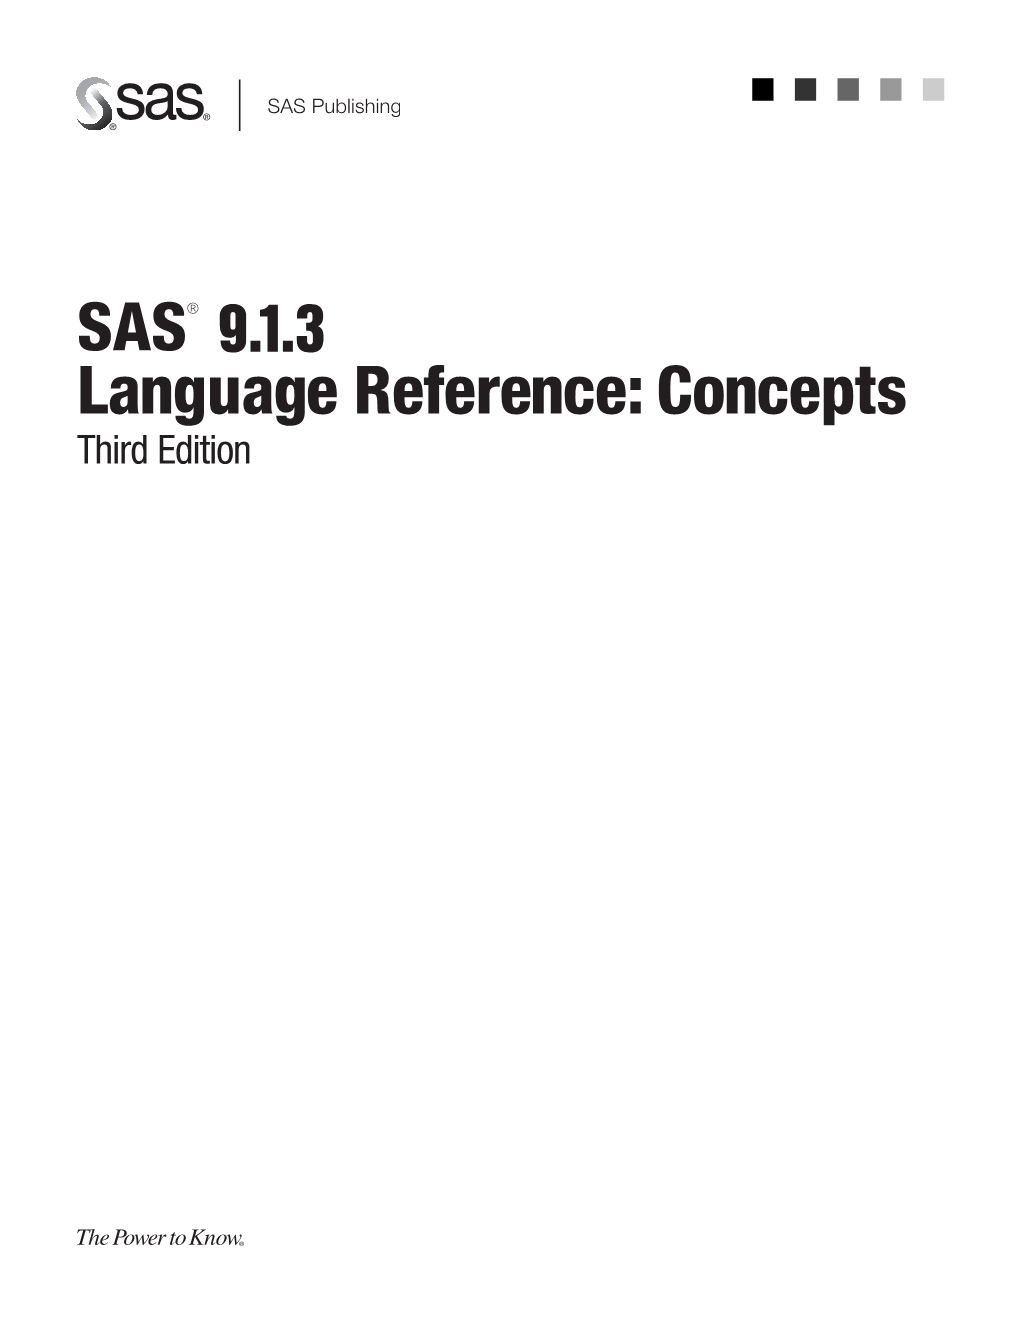 SAS 9.1.3 Language Reference: Concepts, Third Edition